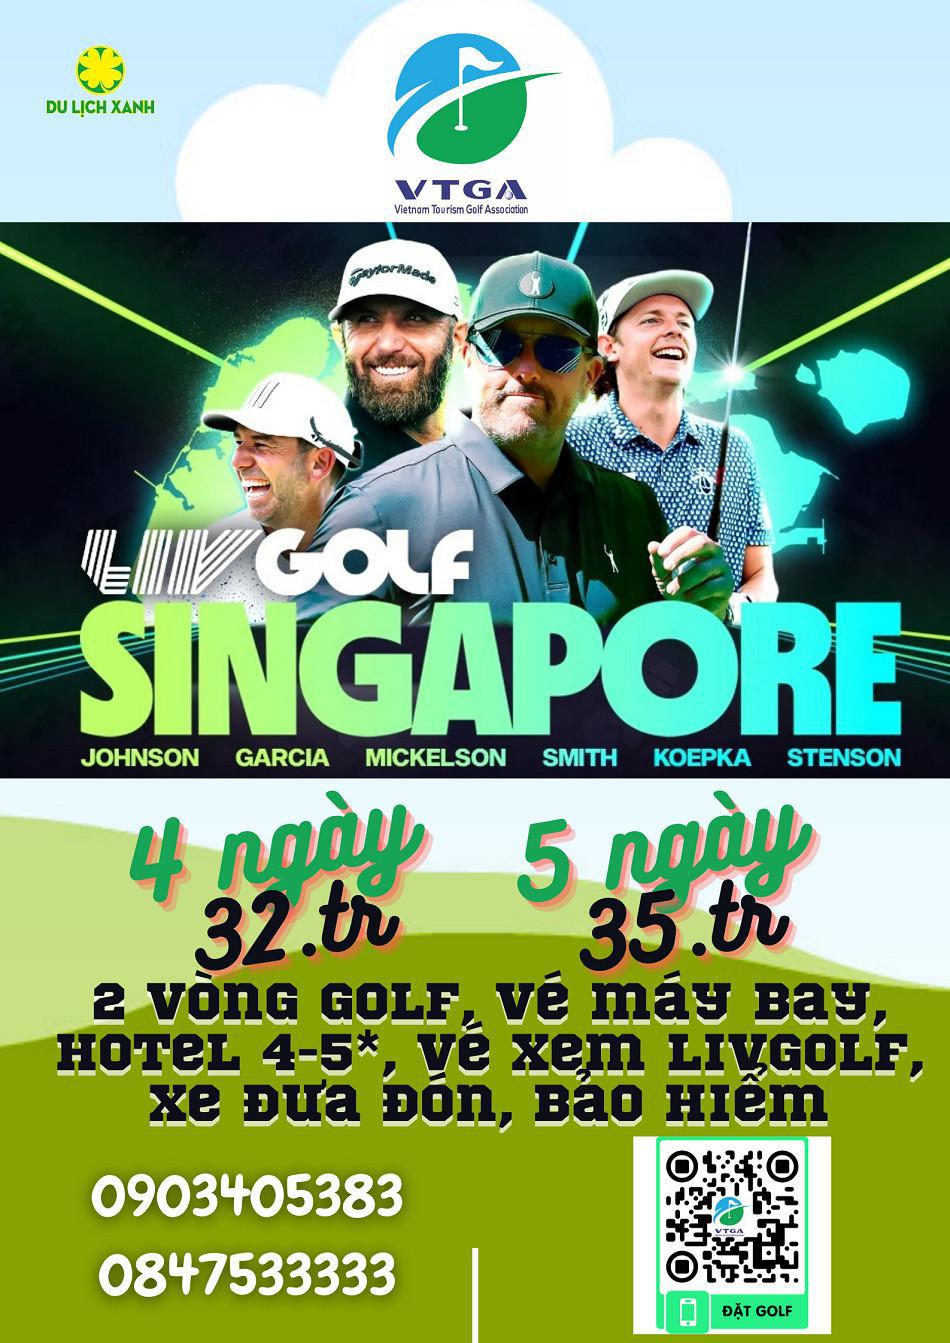 Tour xem Golf LIV Singapore 4 ngày 2 vòng golf hấp dẫn